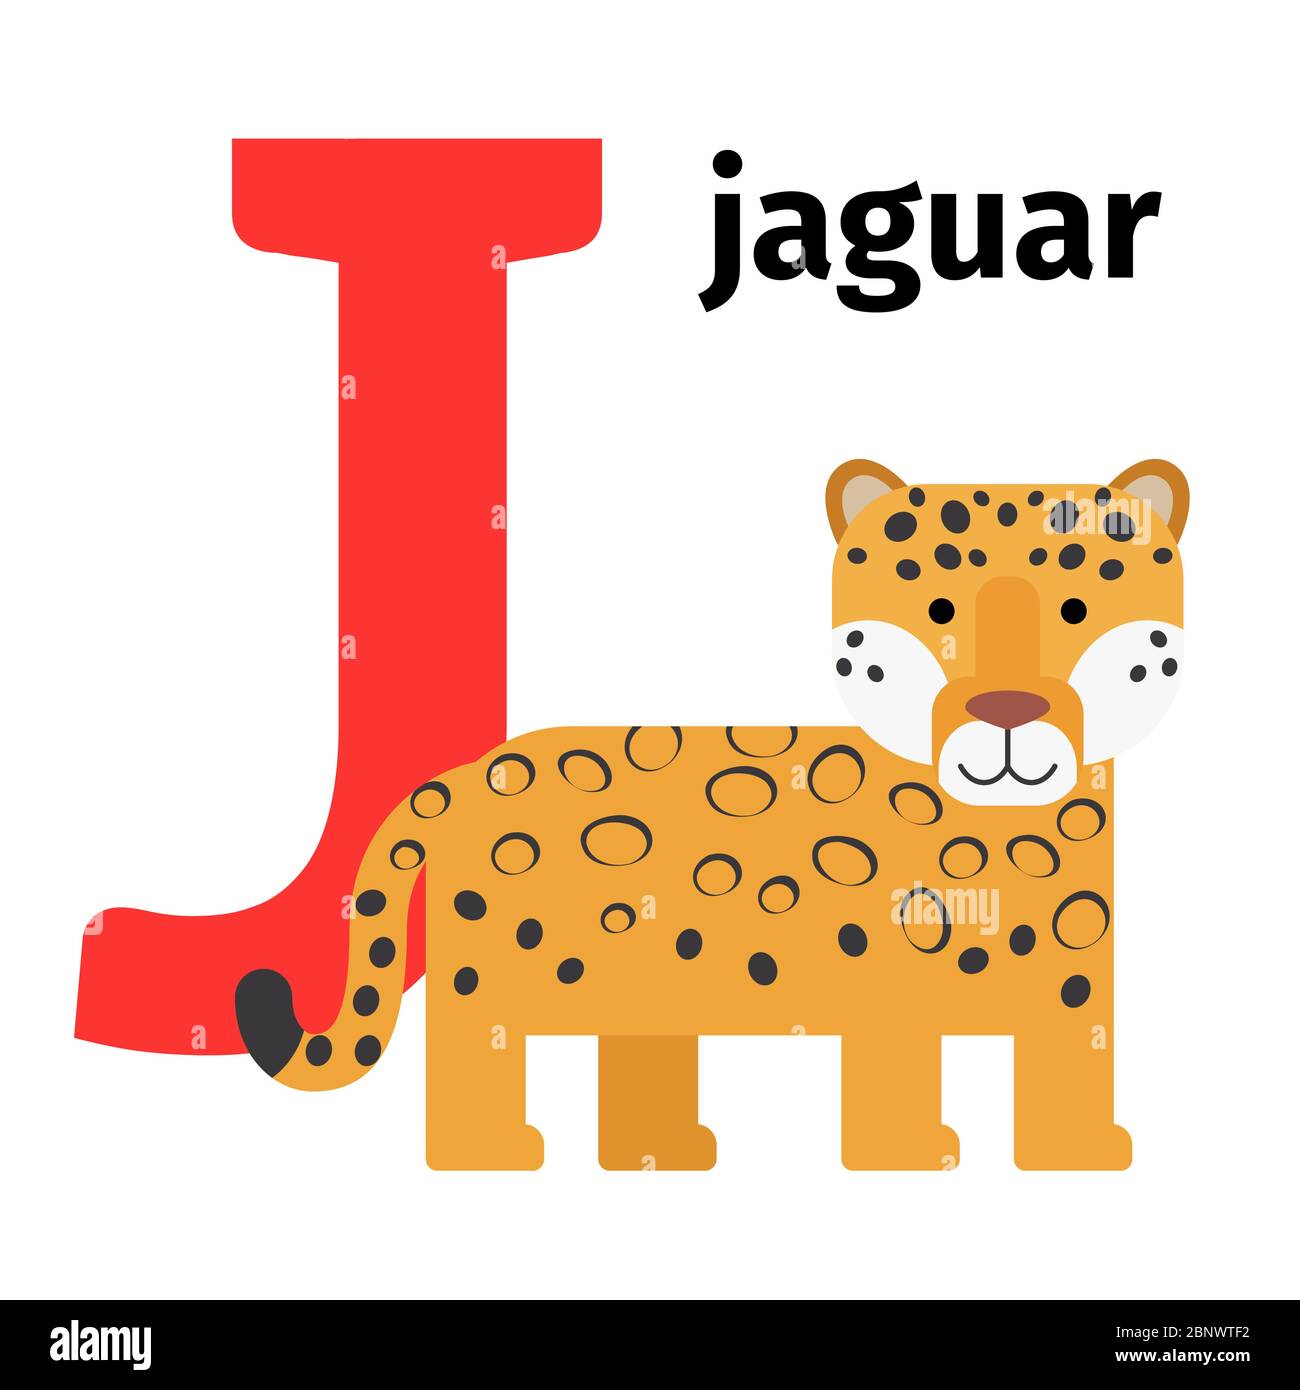 Animals That Start With J